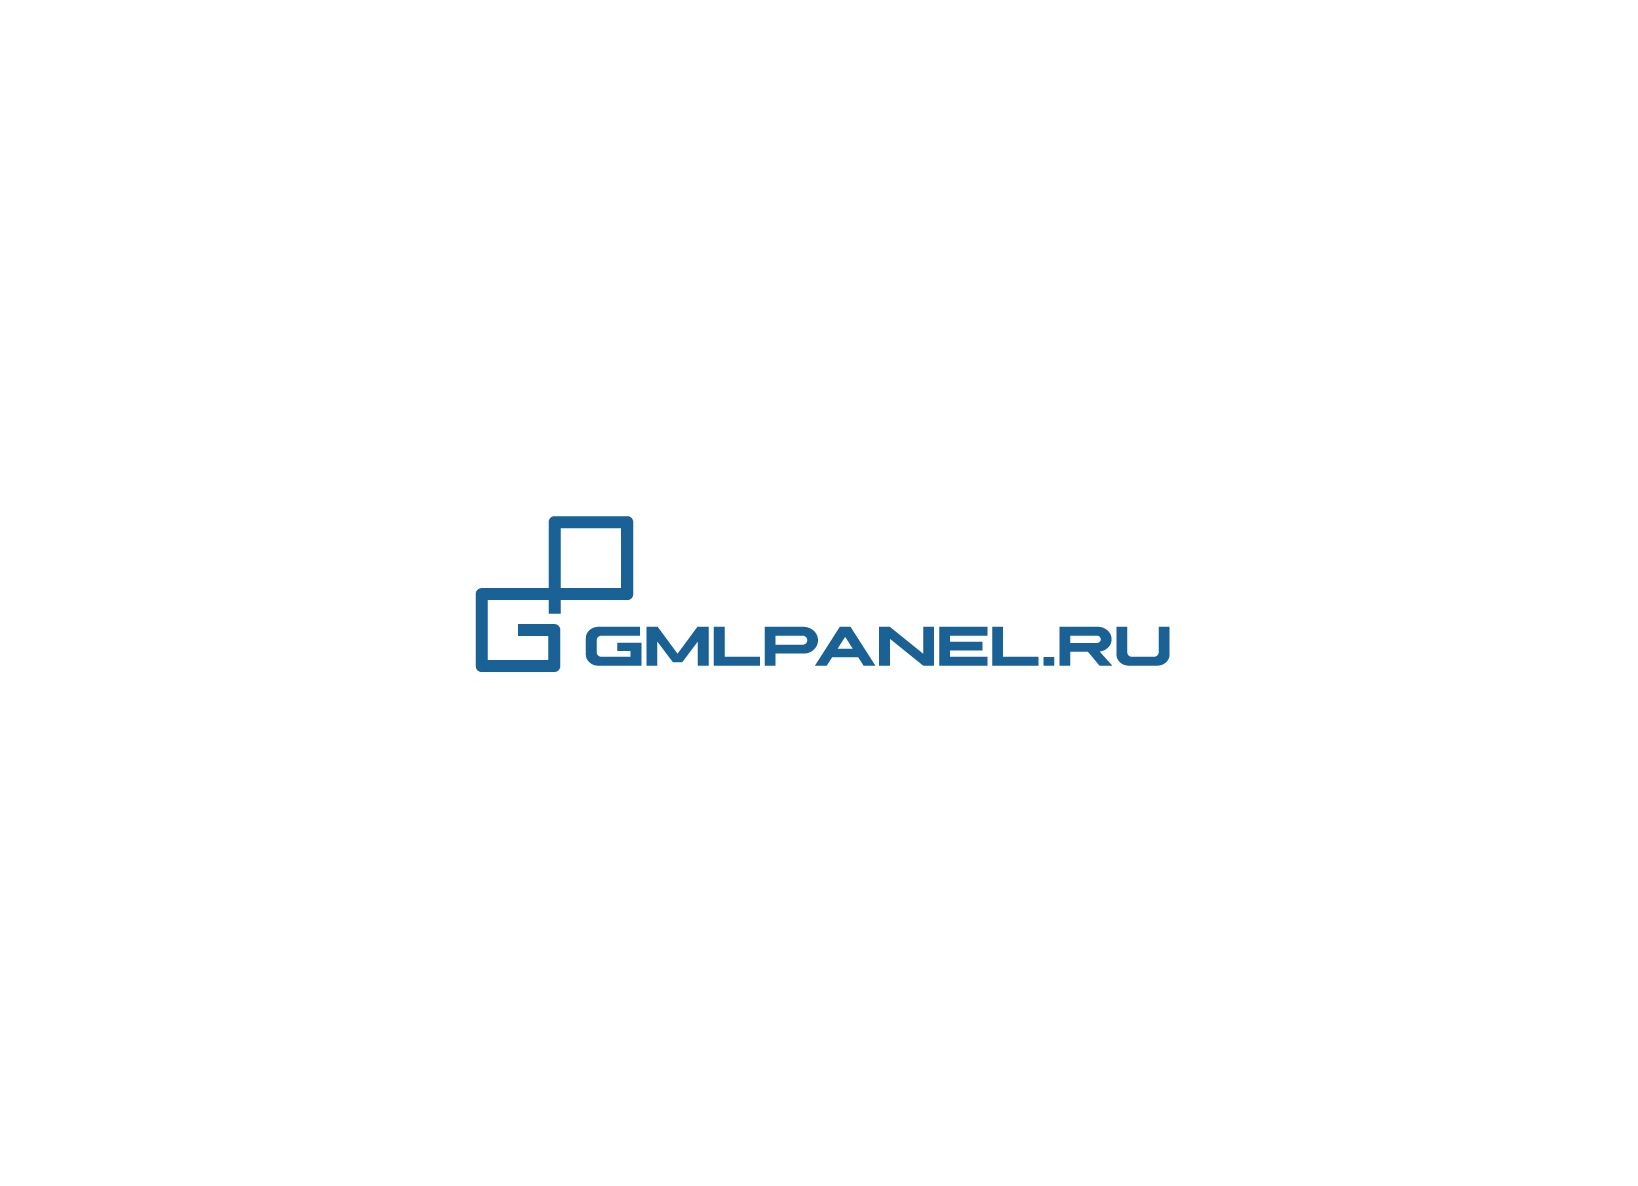 Логотип для сайта GMLPANEL.RU - дизайнер U4po4mak